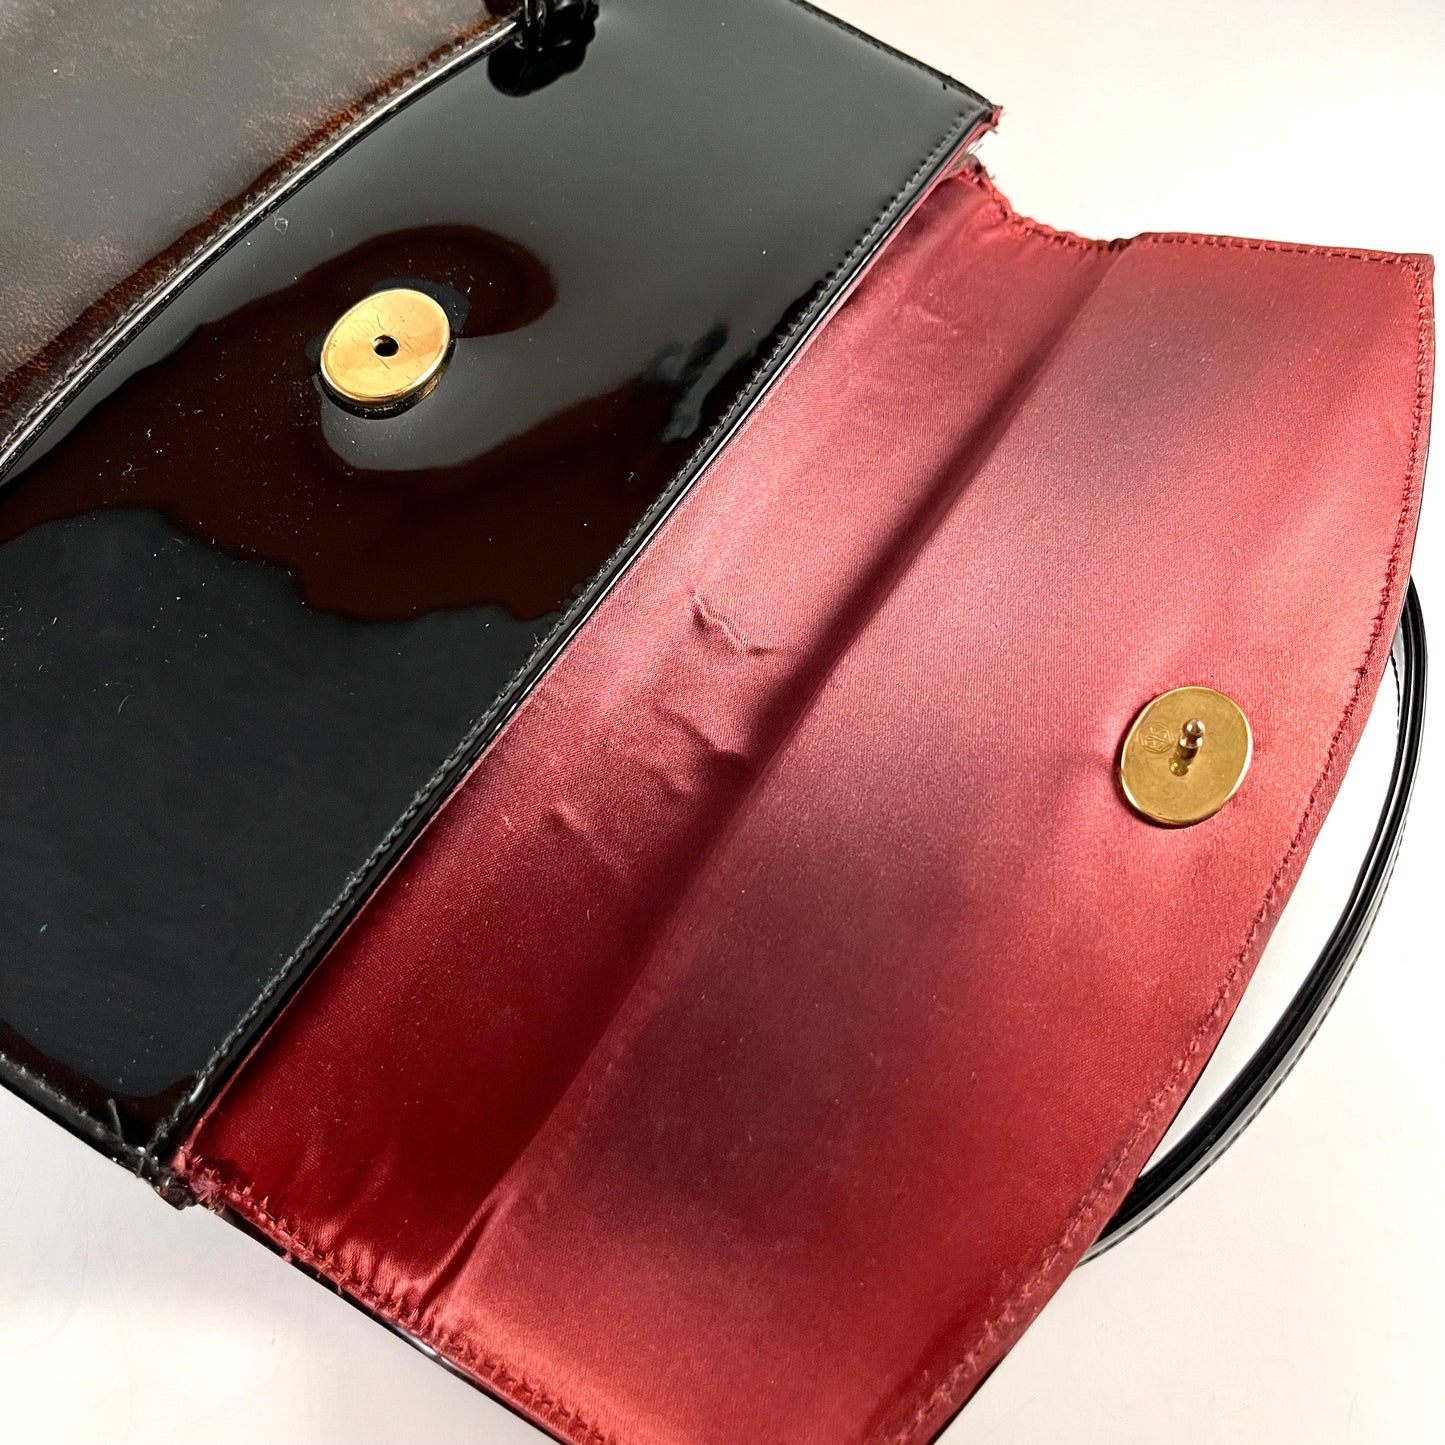 1950s Lennox Handbag With Original Mirror, Comb & Change Purse